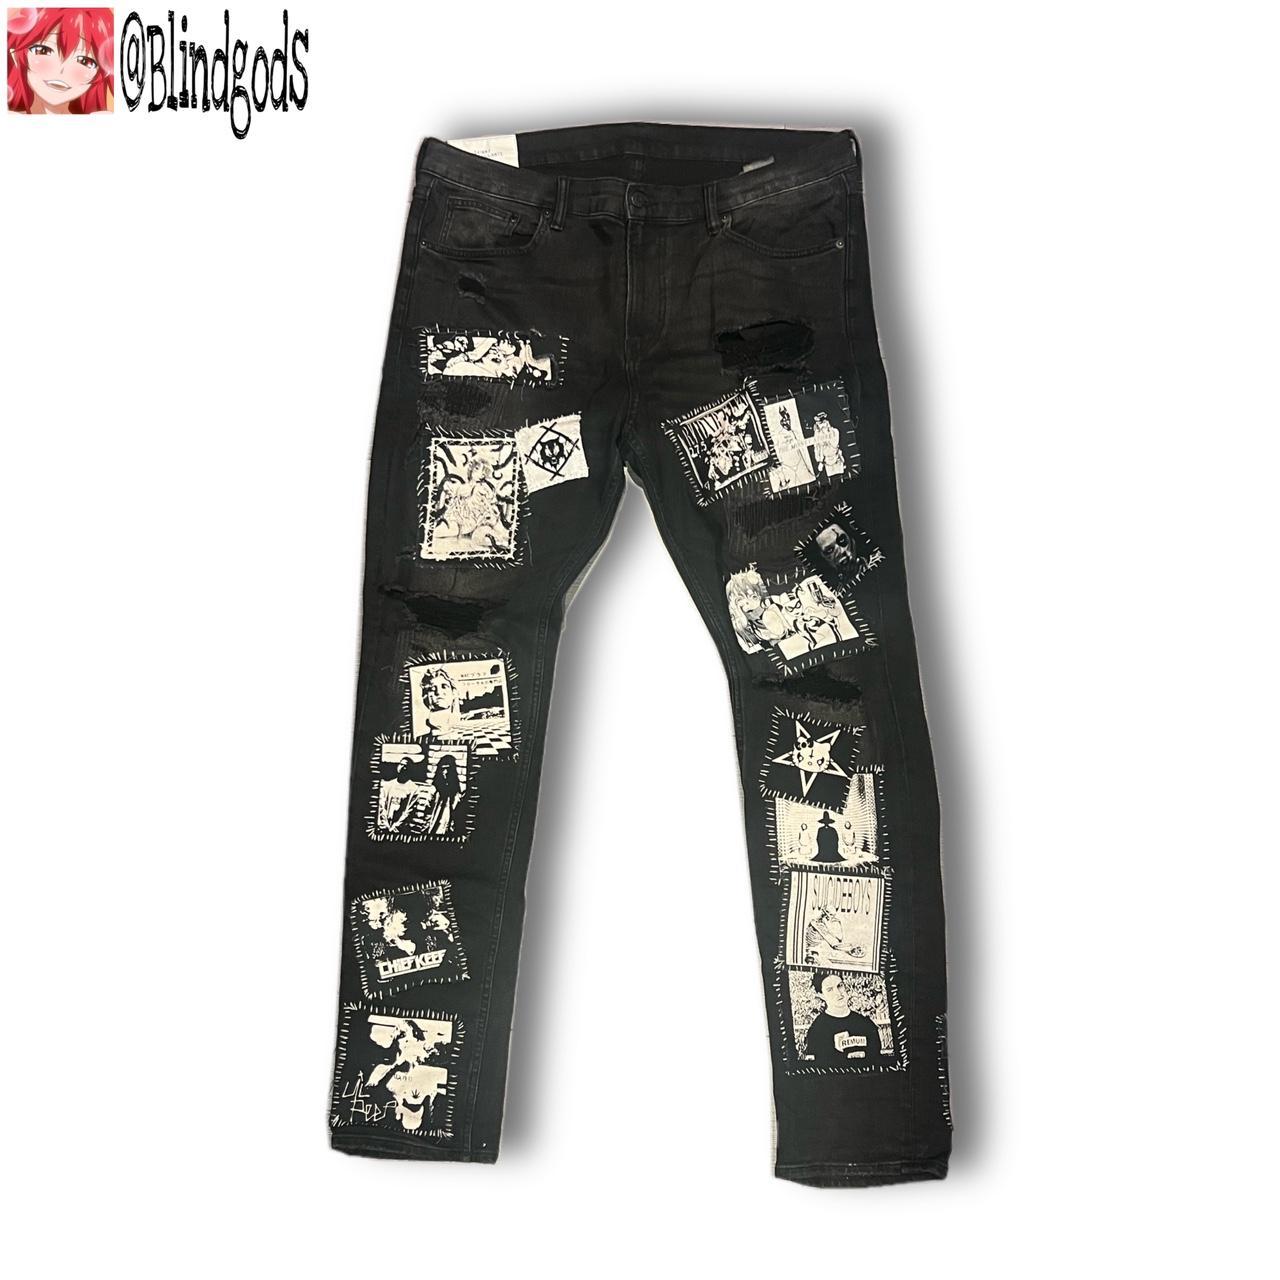 Mst city morgue style patch work black denim jeans... - Depop